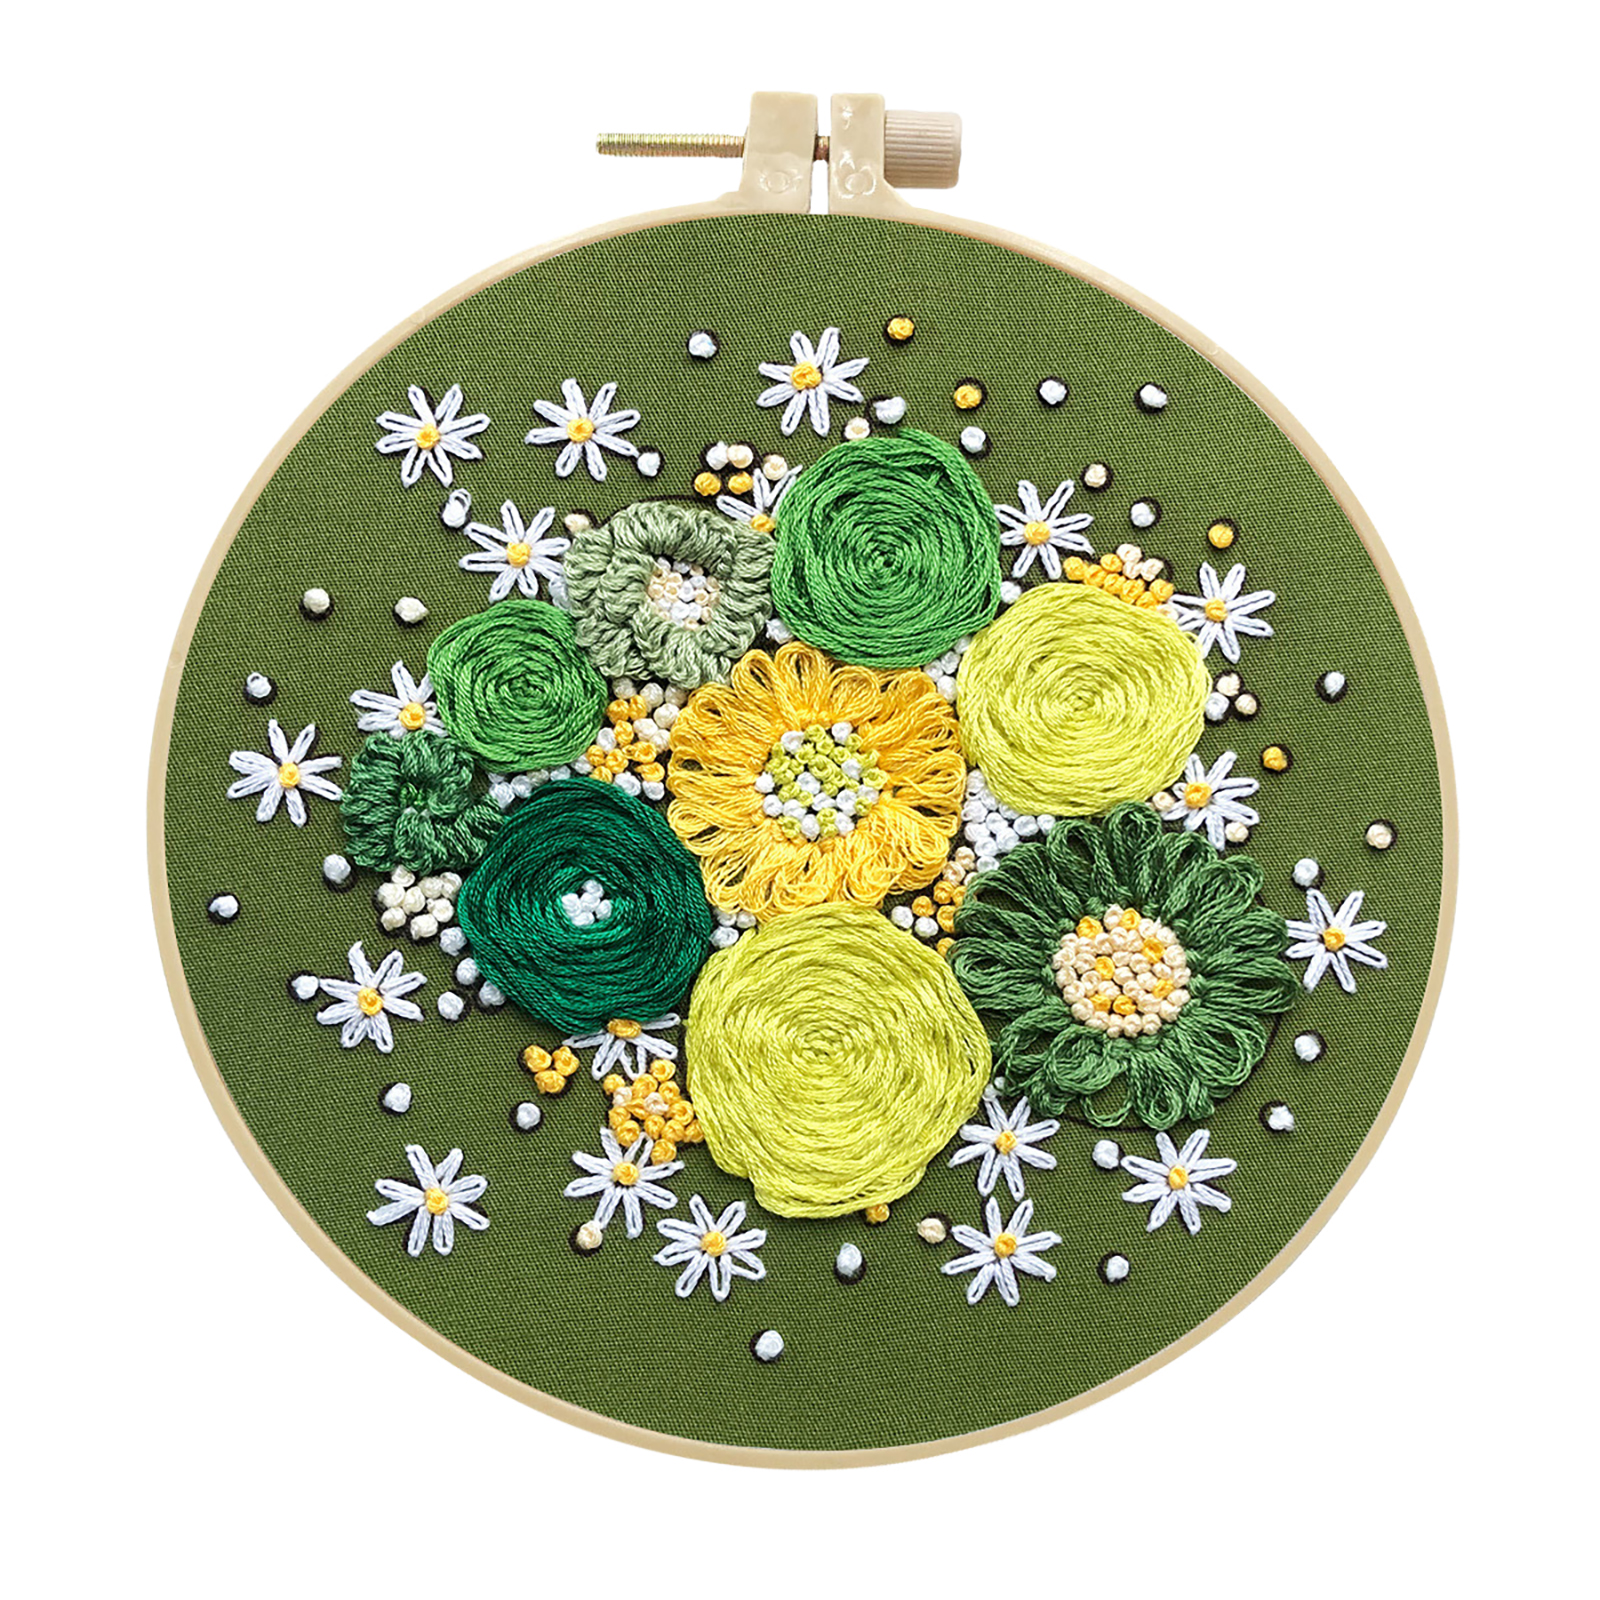 Embroidery Kits Cross stitch kits for Adult Beginner - Green Chrysanthemum Pattern